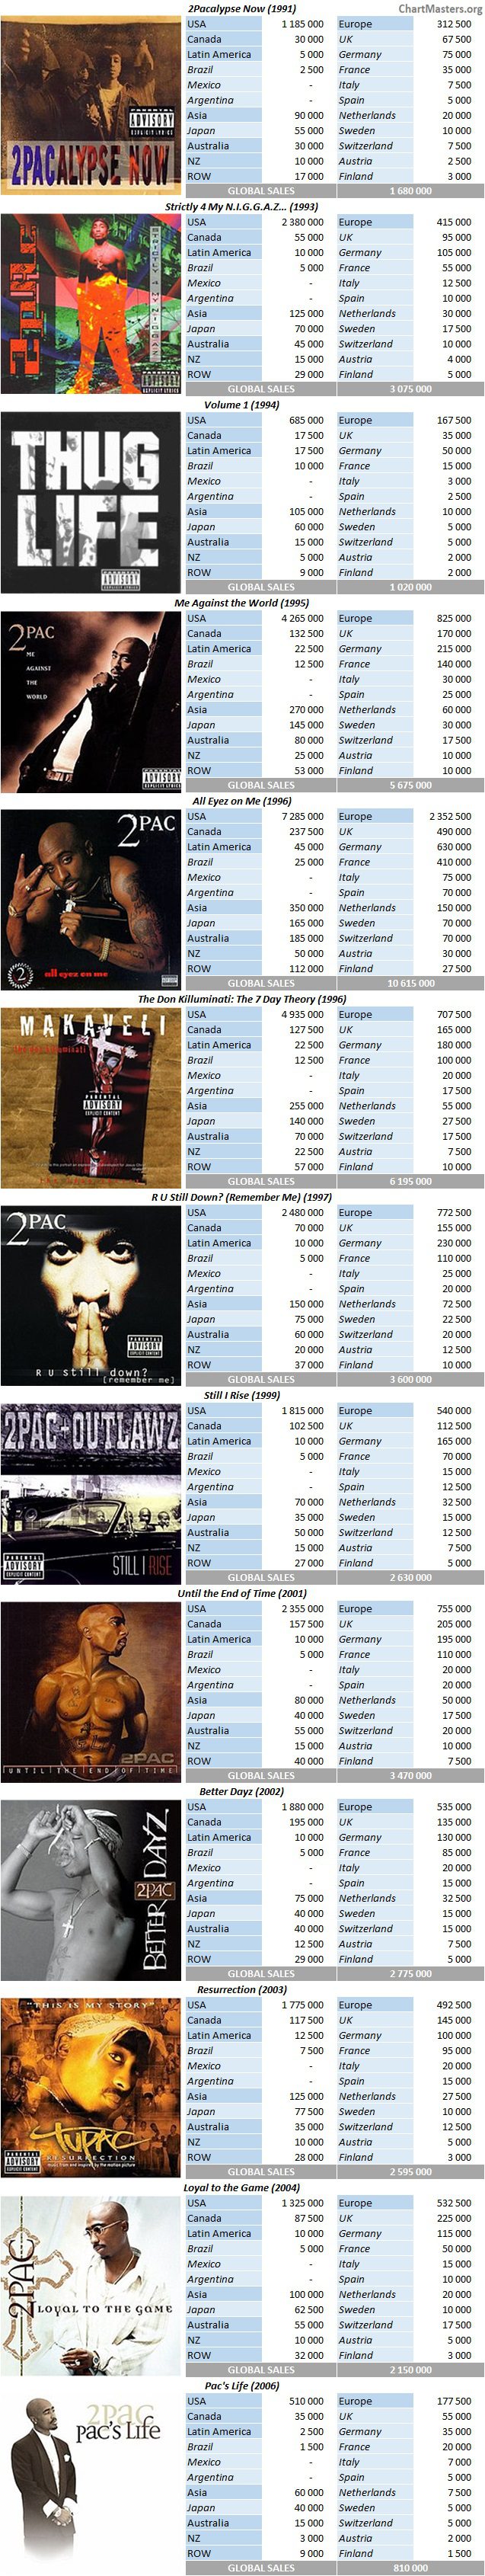 CSPC 2Pac album sales breakdowns